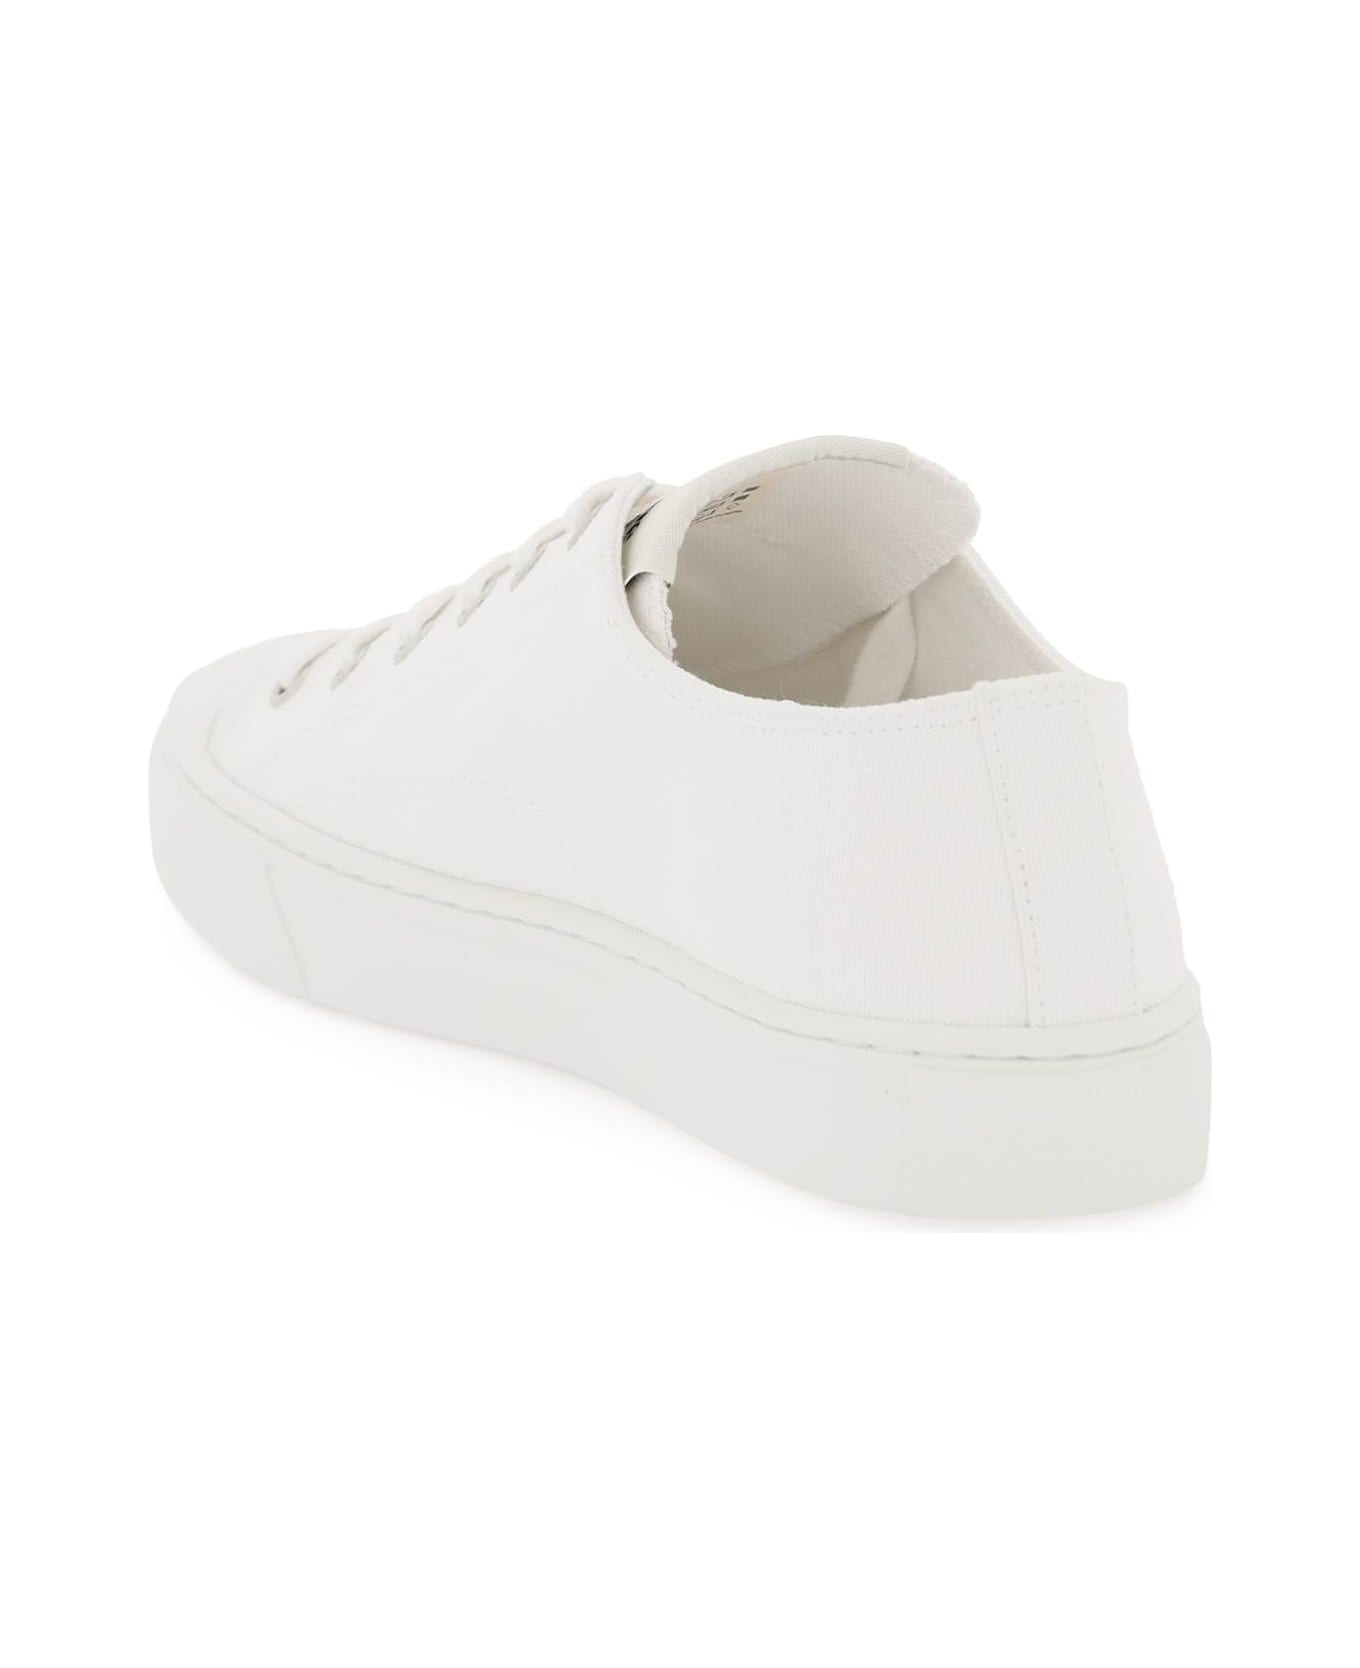 Vivienne Westwood Plimsoll Low Top 2.0 Sneakers - OPTIC WHITE (White) スニーカー